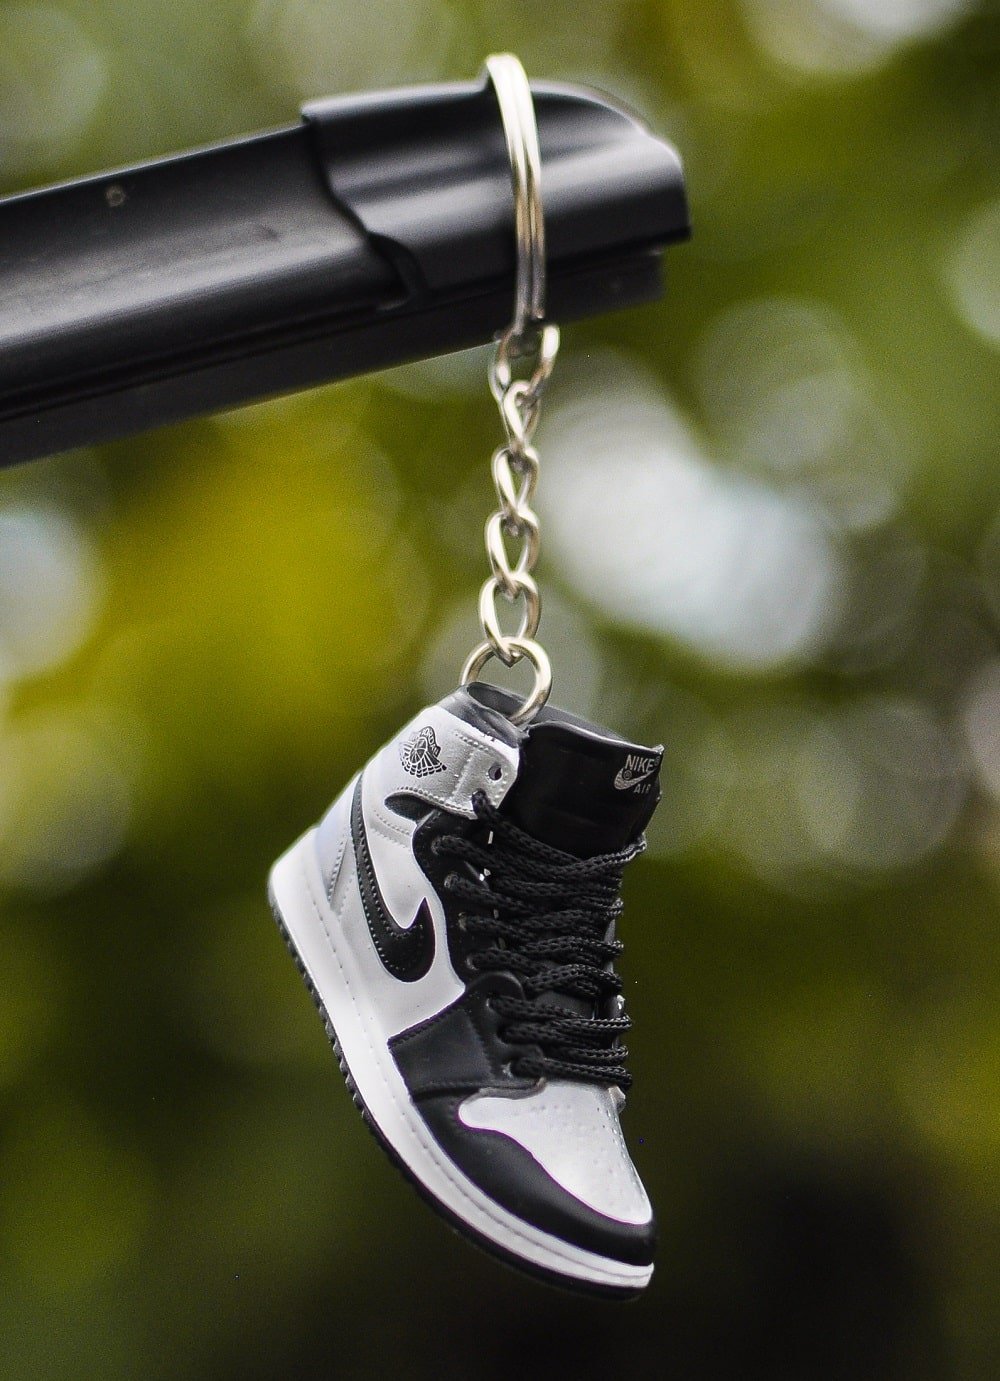 Sneaker Keychain | Jordan 3D Keychain | Kicks Machine